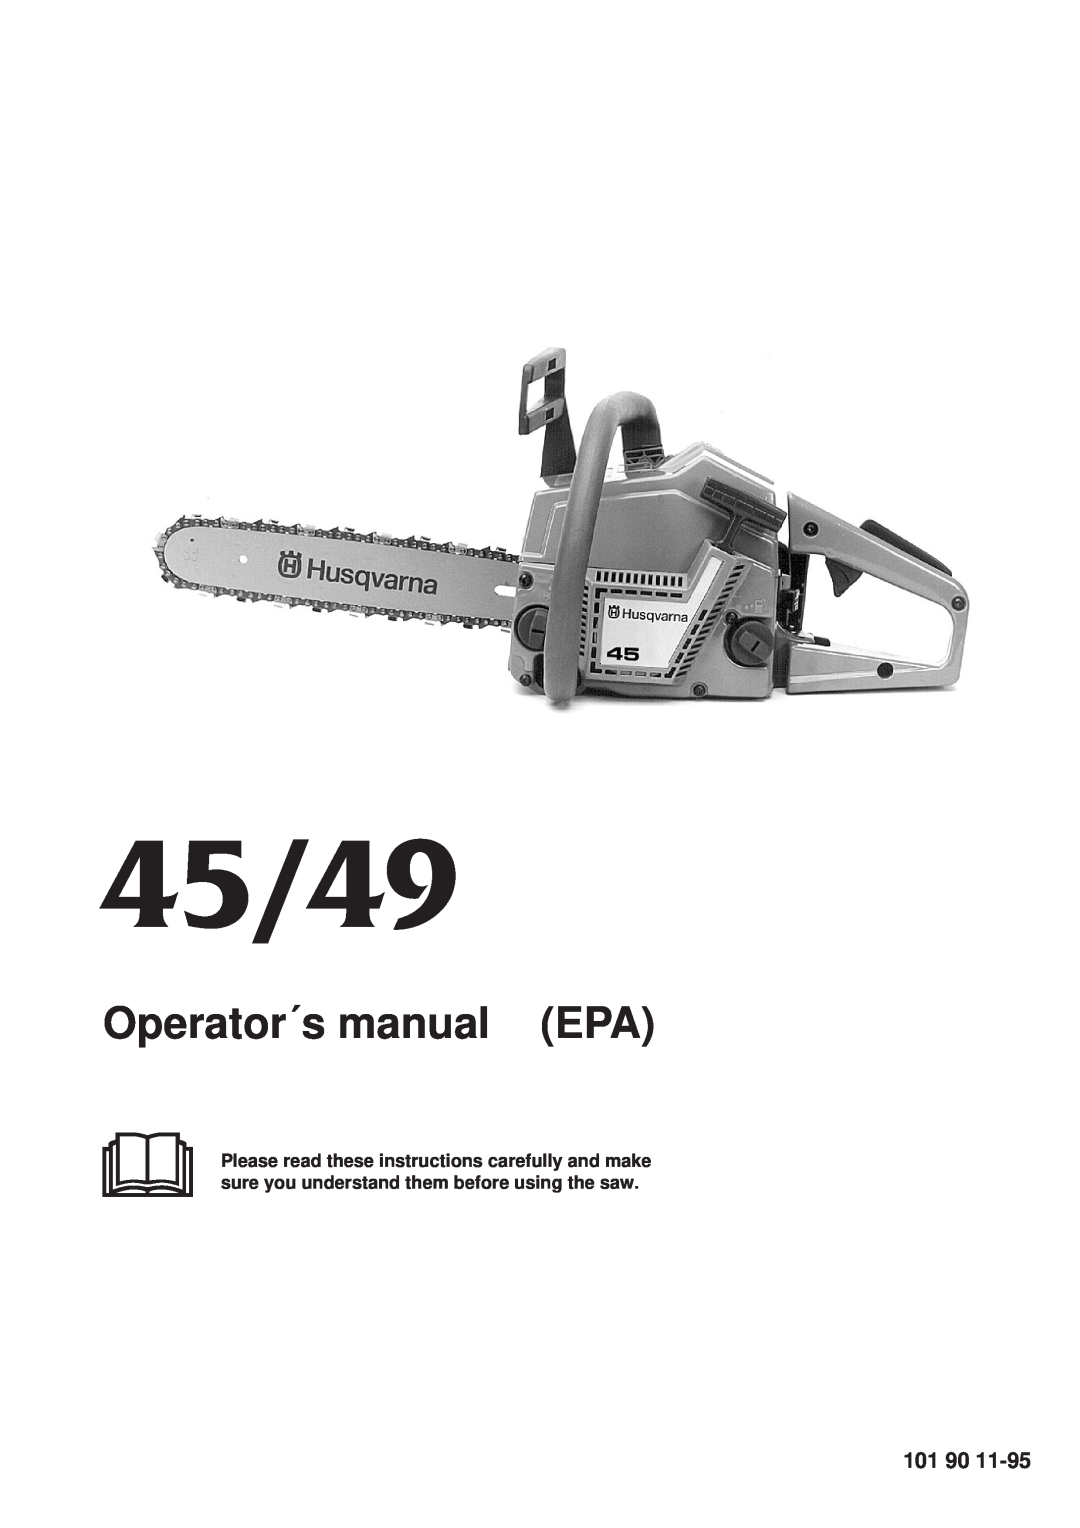 Husqvarna manual 45/49, Operator´s manual EPA, 101 